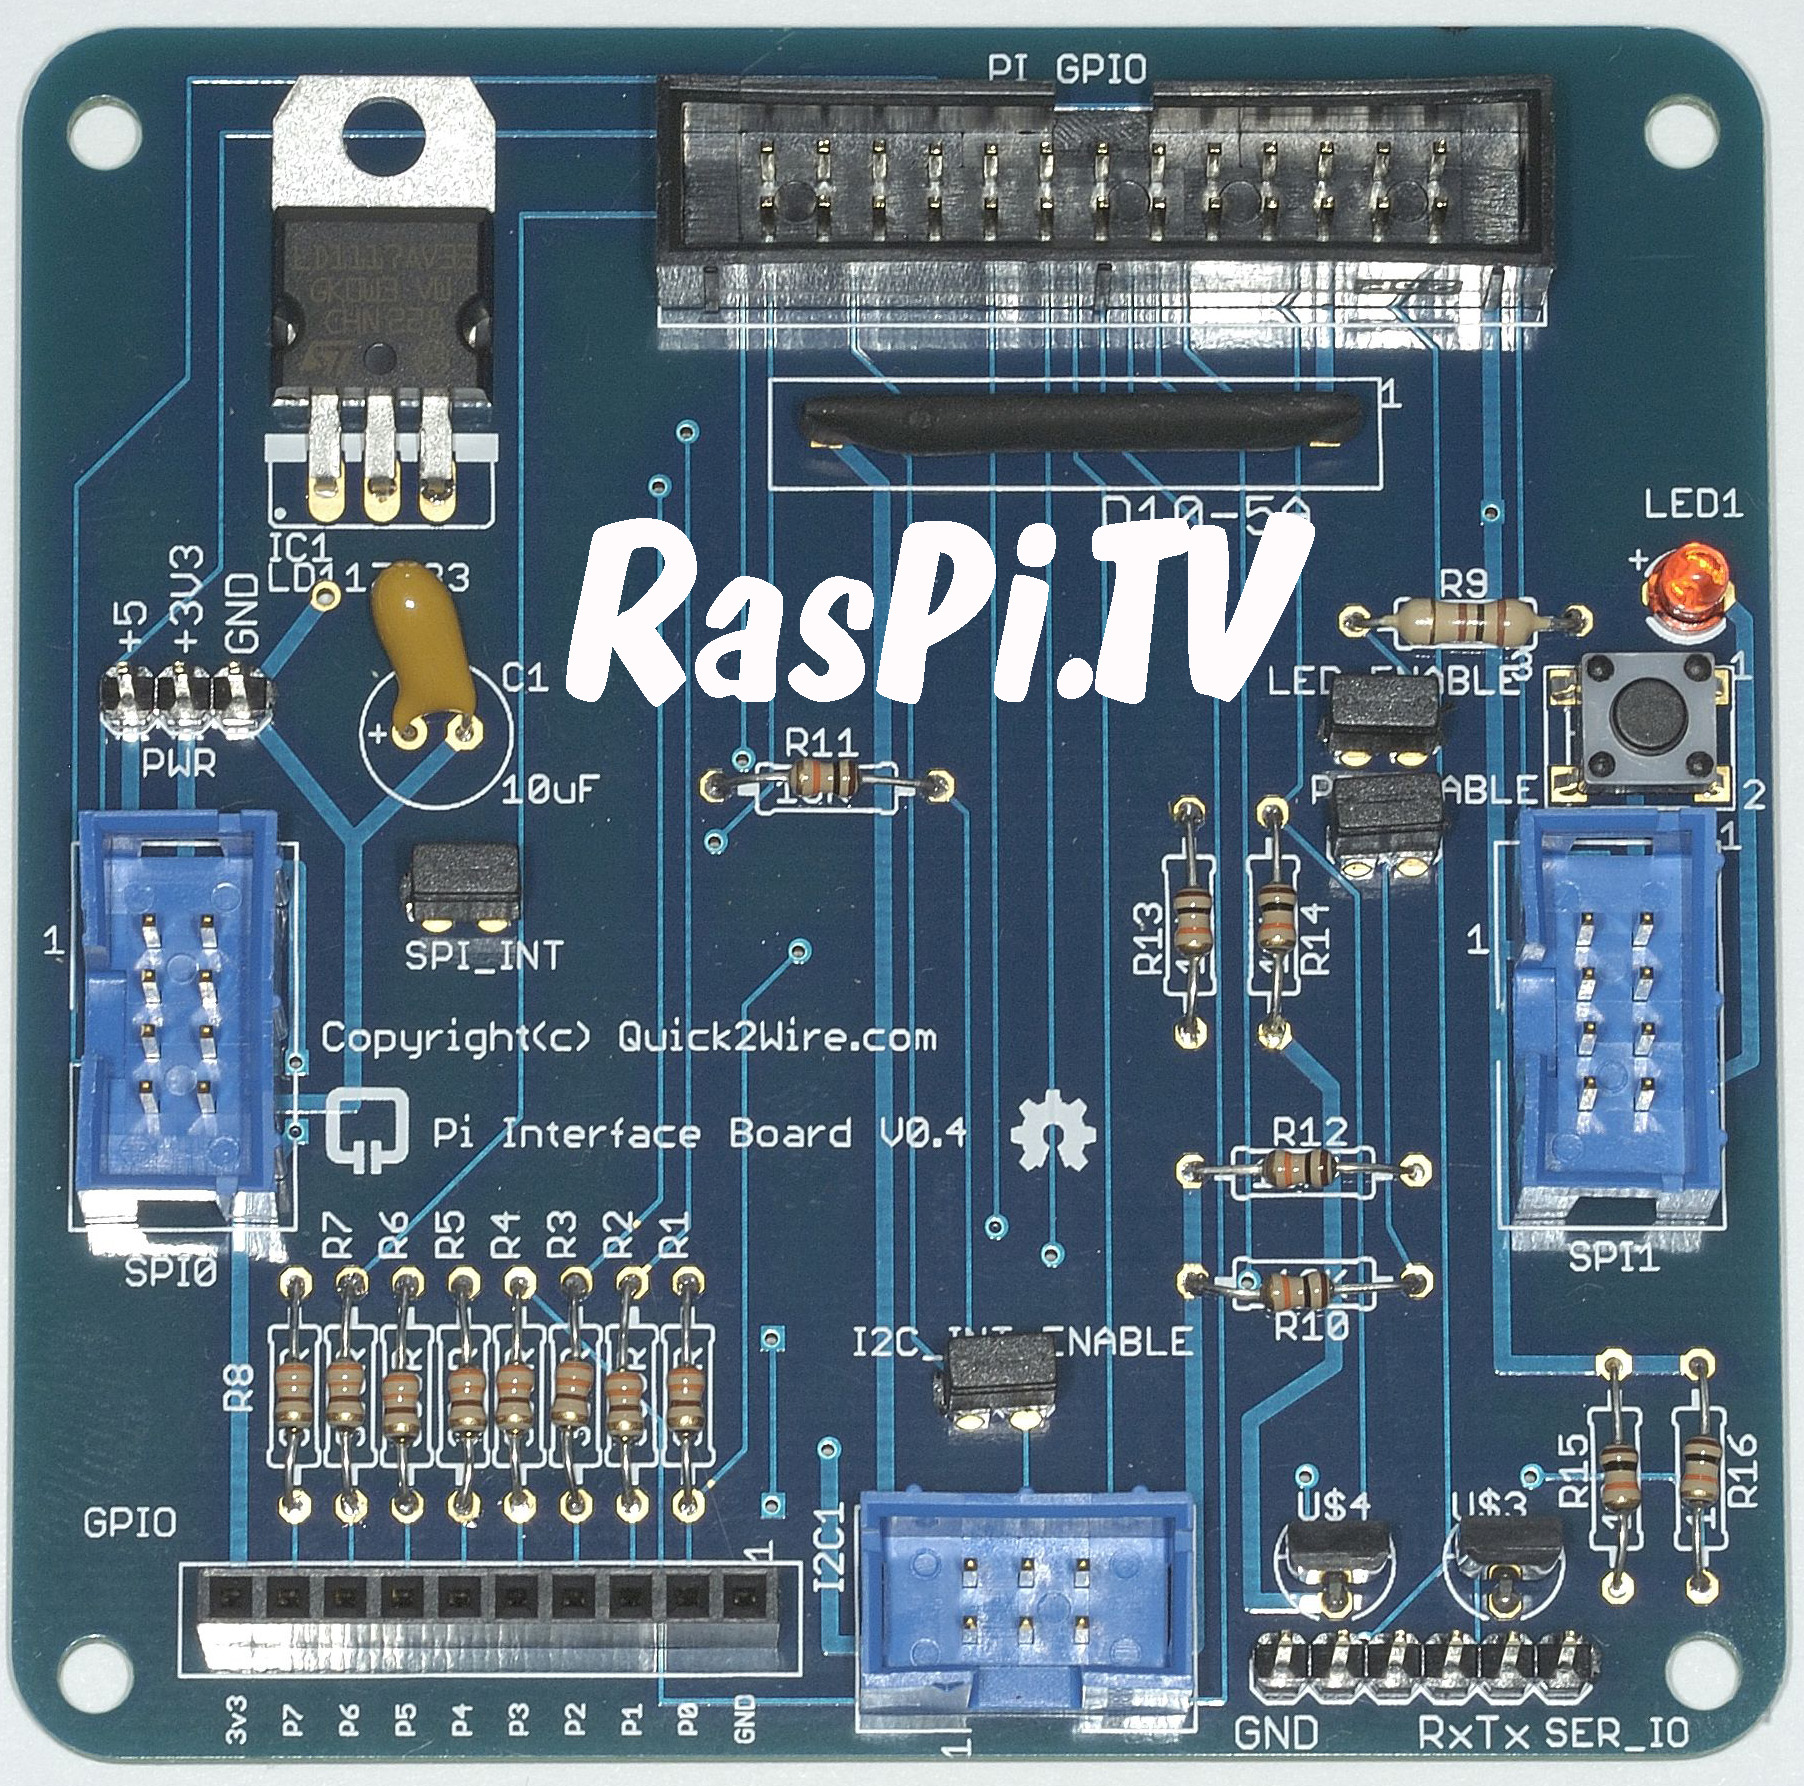 Raspberry Pi 2 - Review! 